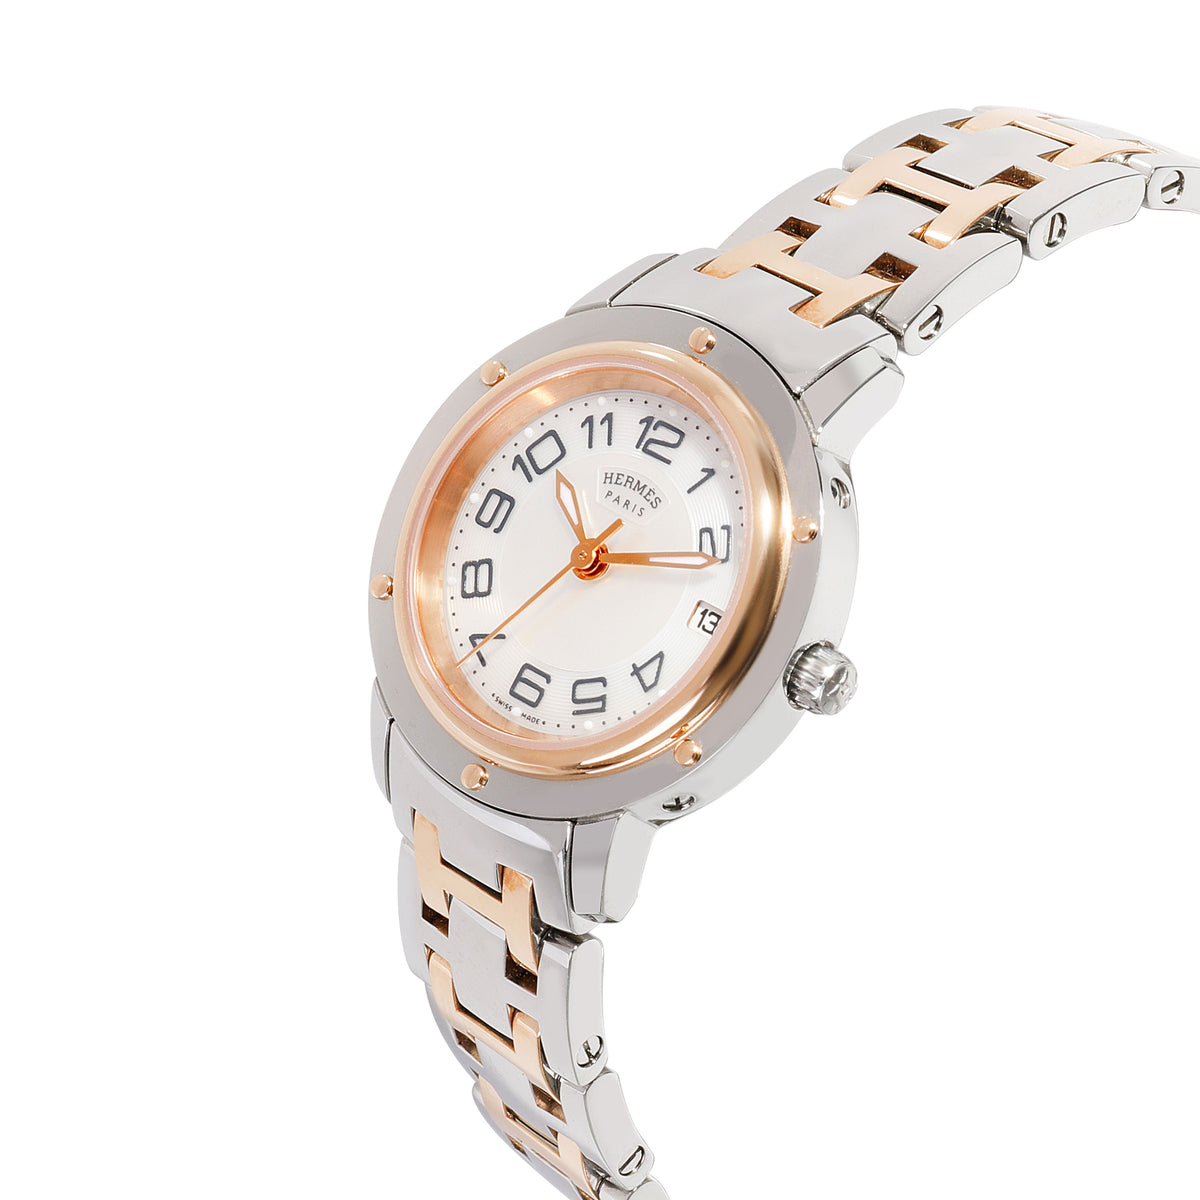 Hermès Clipper CP1.221.212.4970 Women's Watch in 18kt Stainless Steel/Rose Gold